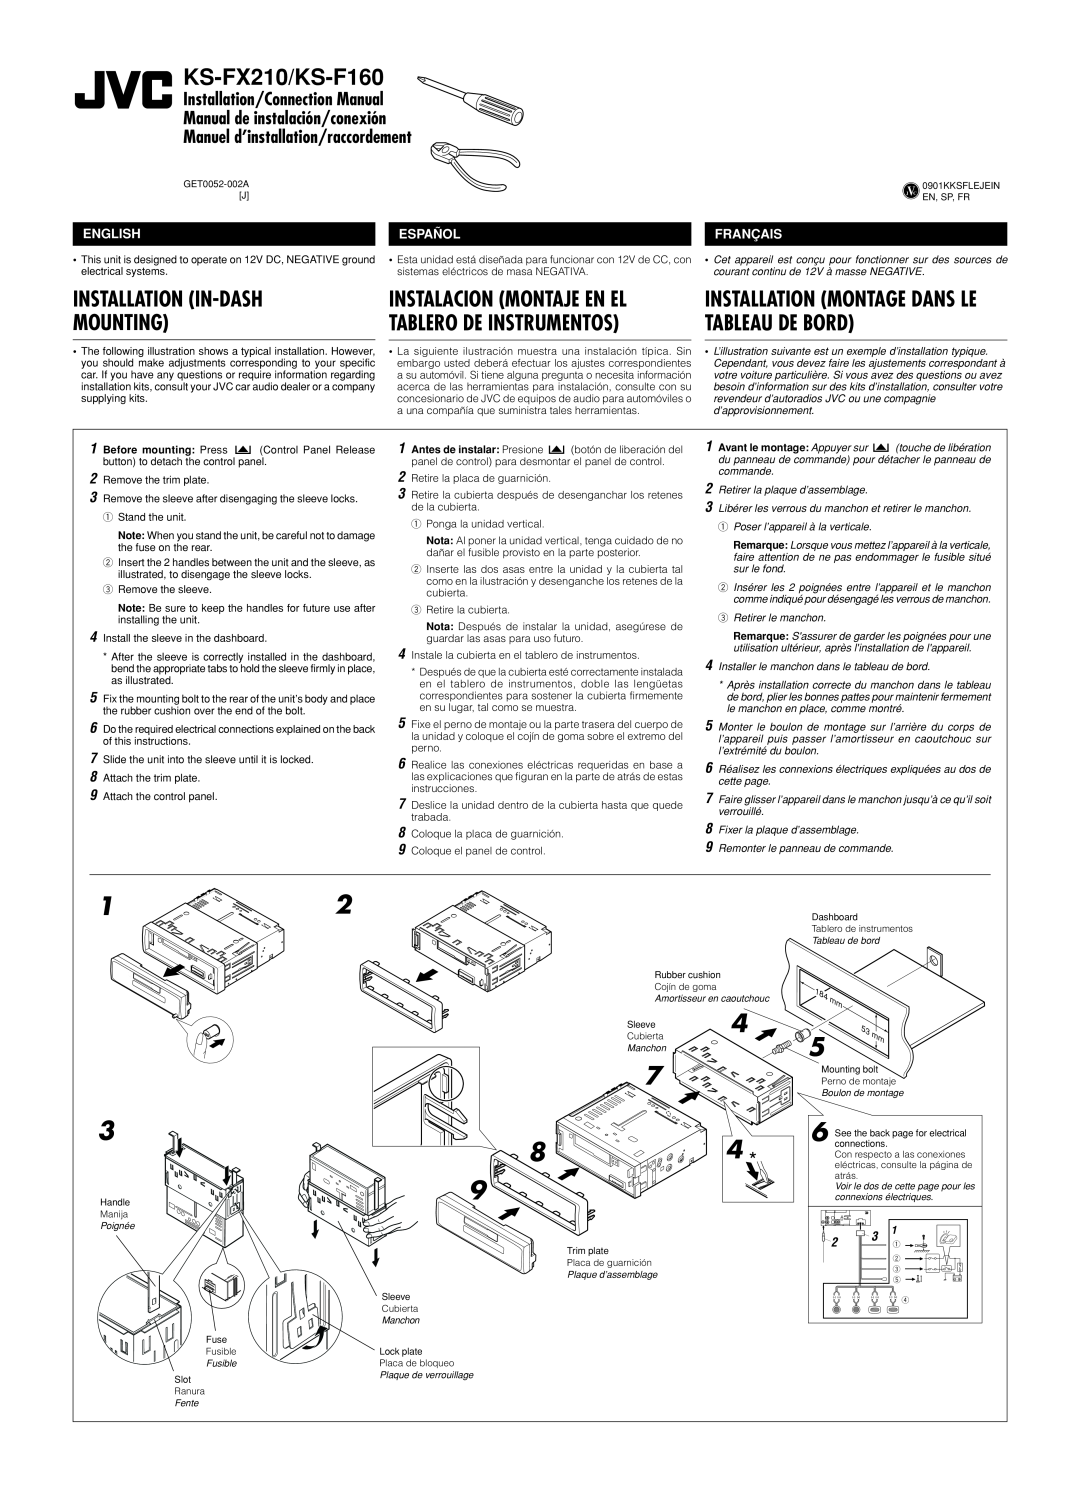 JVC manual KS-FX210/KS-F160, Installation In-Dash Mounting, English, Español, Français, Installation/Connection Manual 